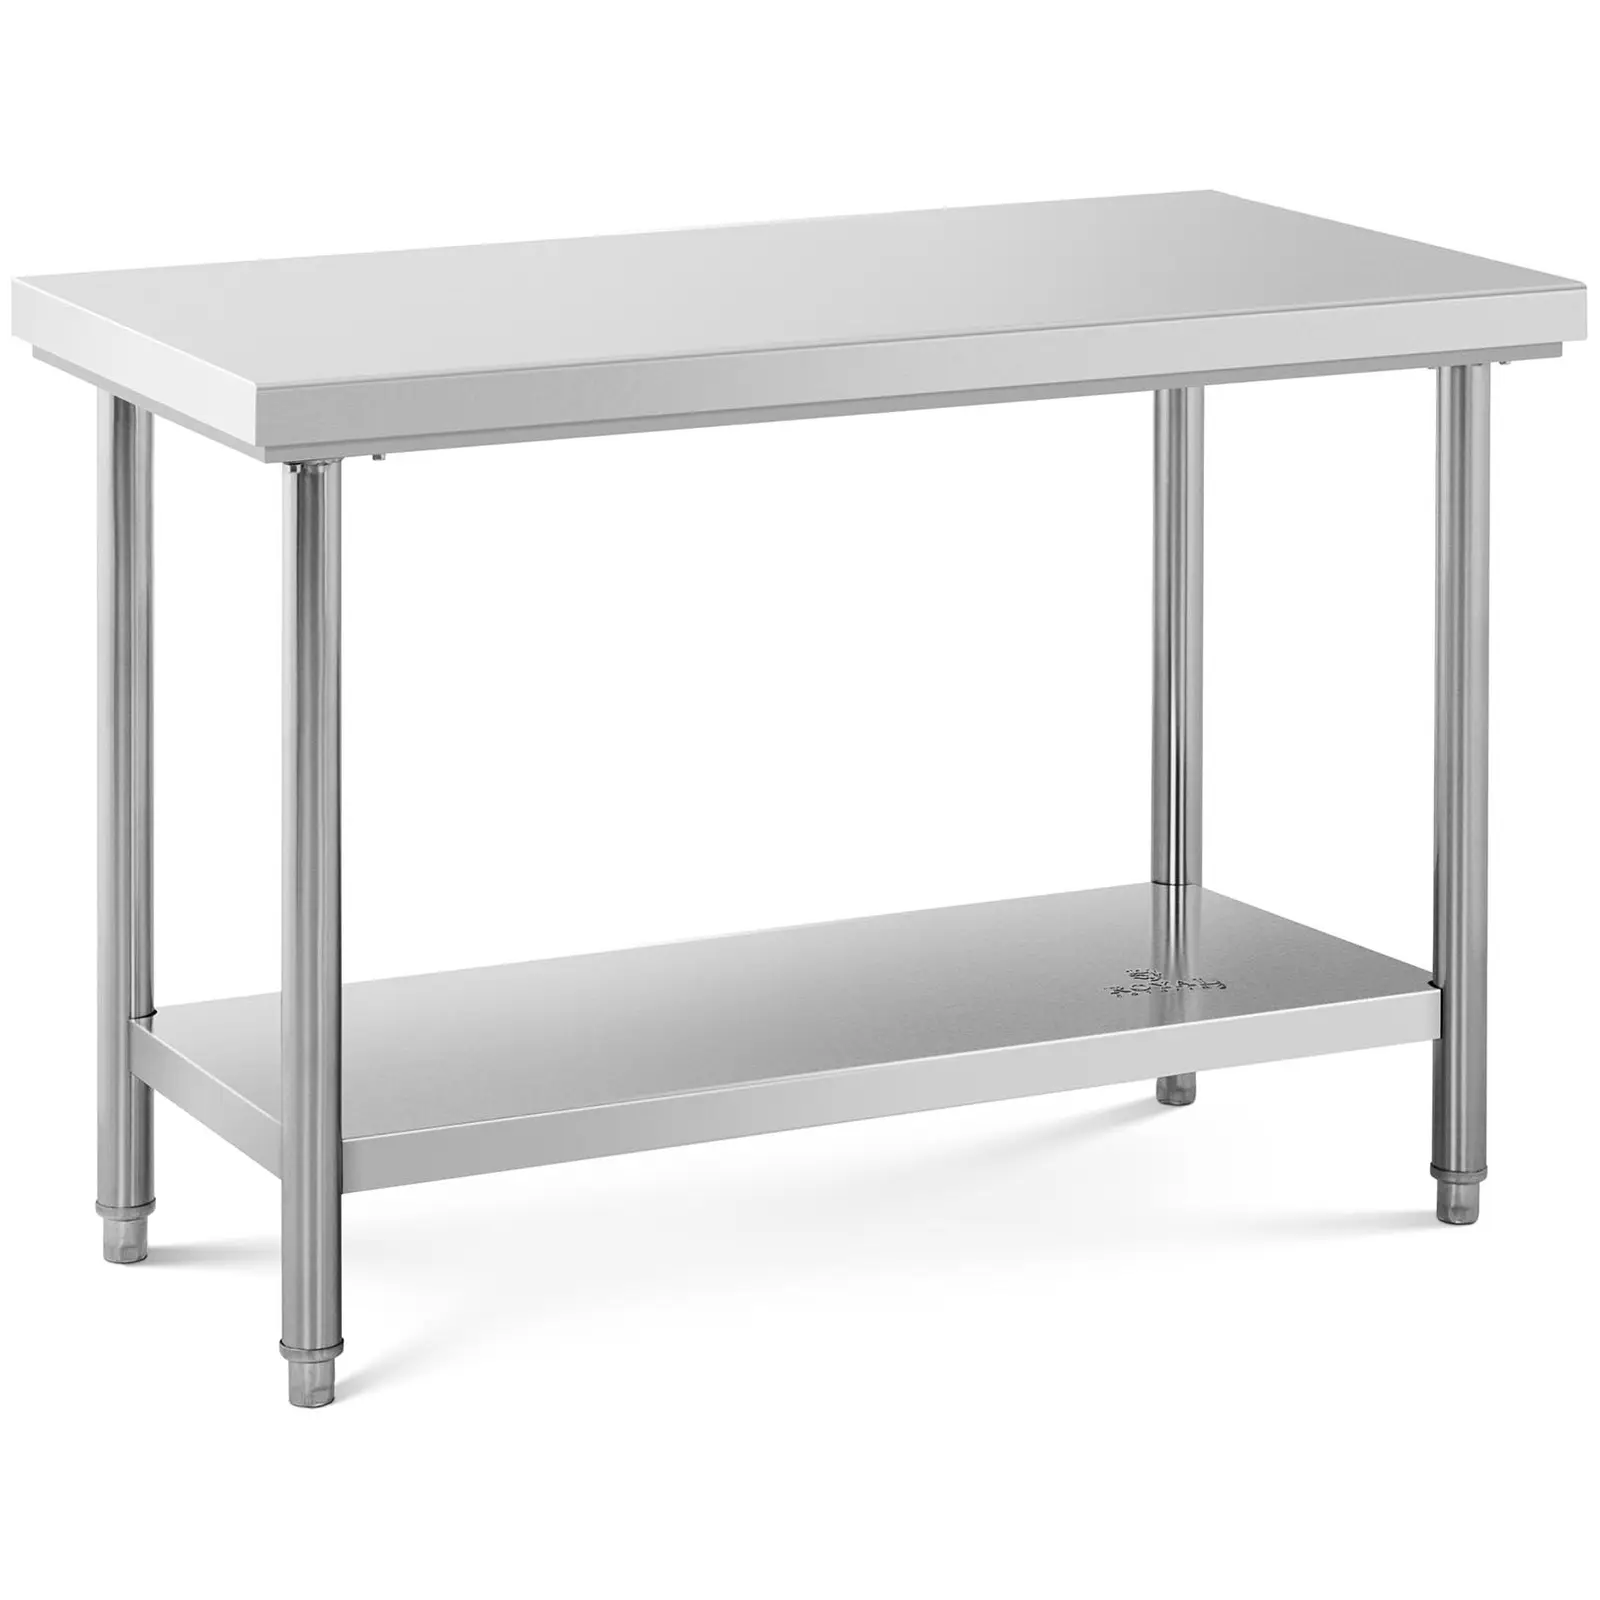 Stainless Steel Work Table - 120 x 60 cm - 137 kg capacity